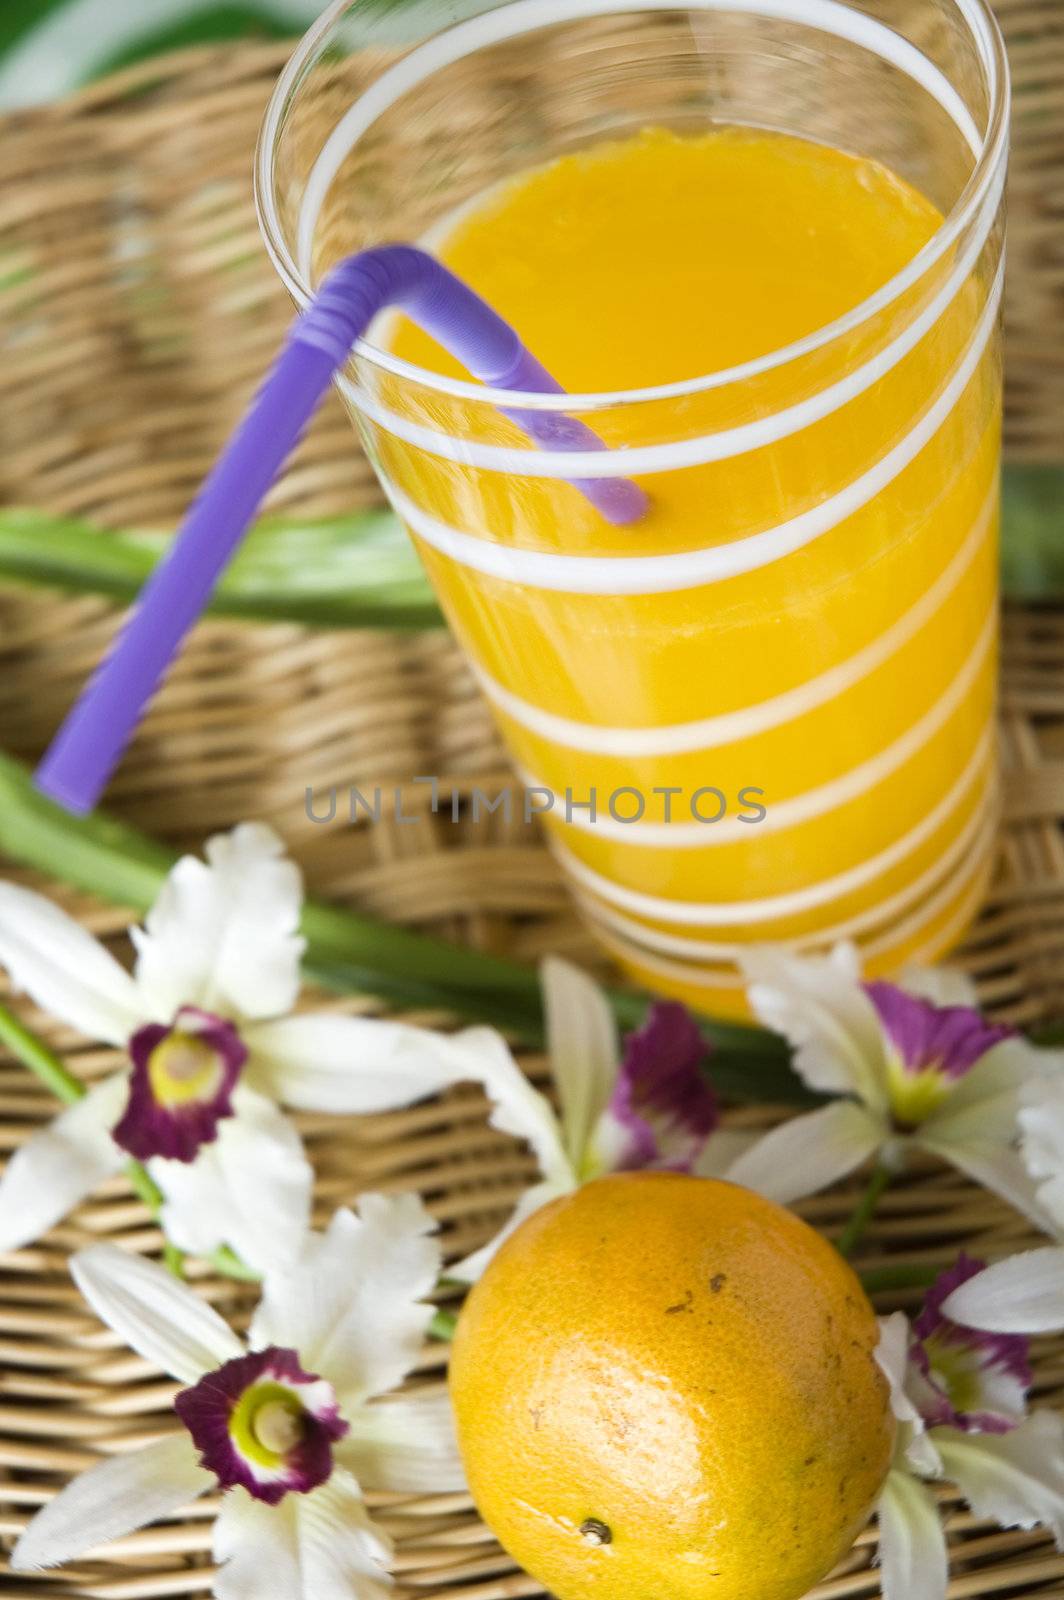 drinking straw in juice glass by daniaphoto